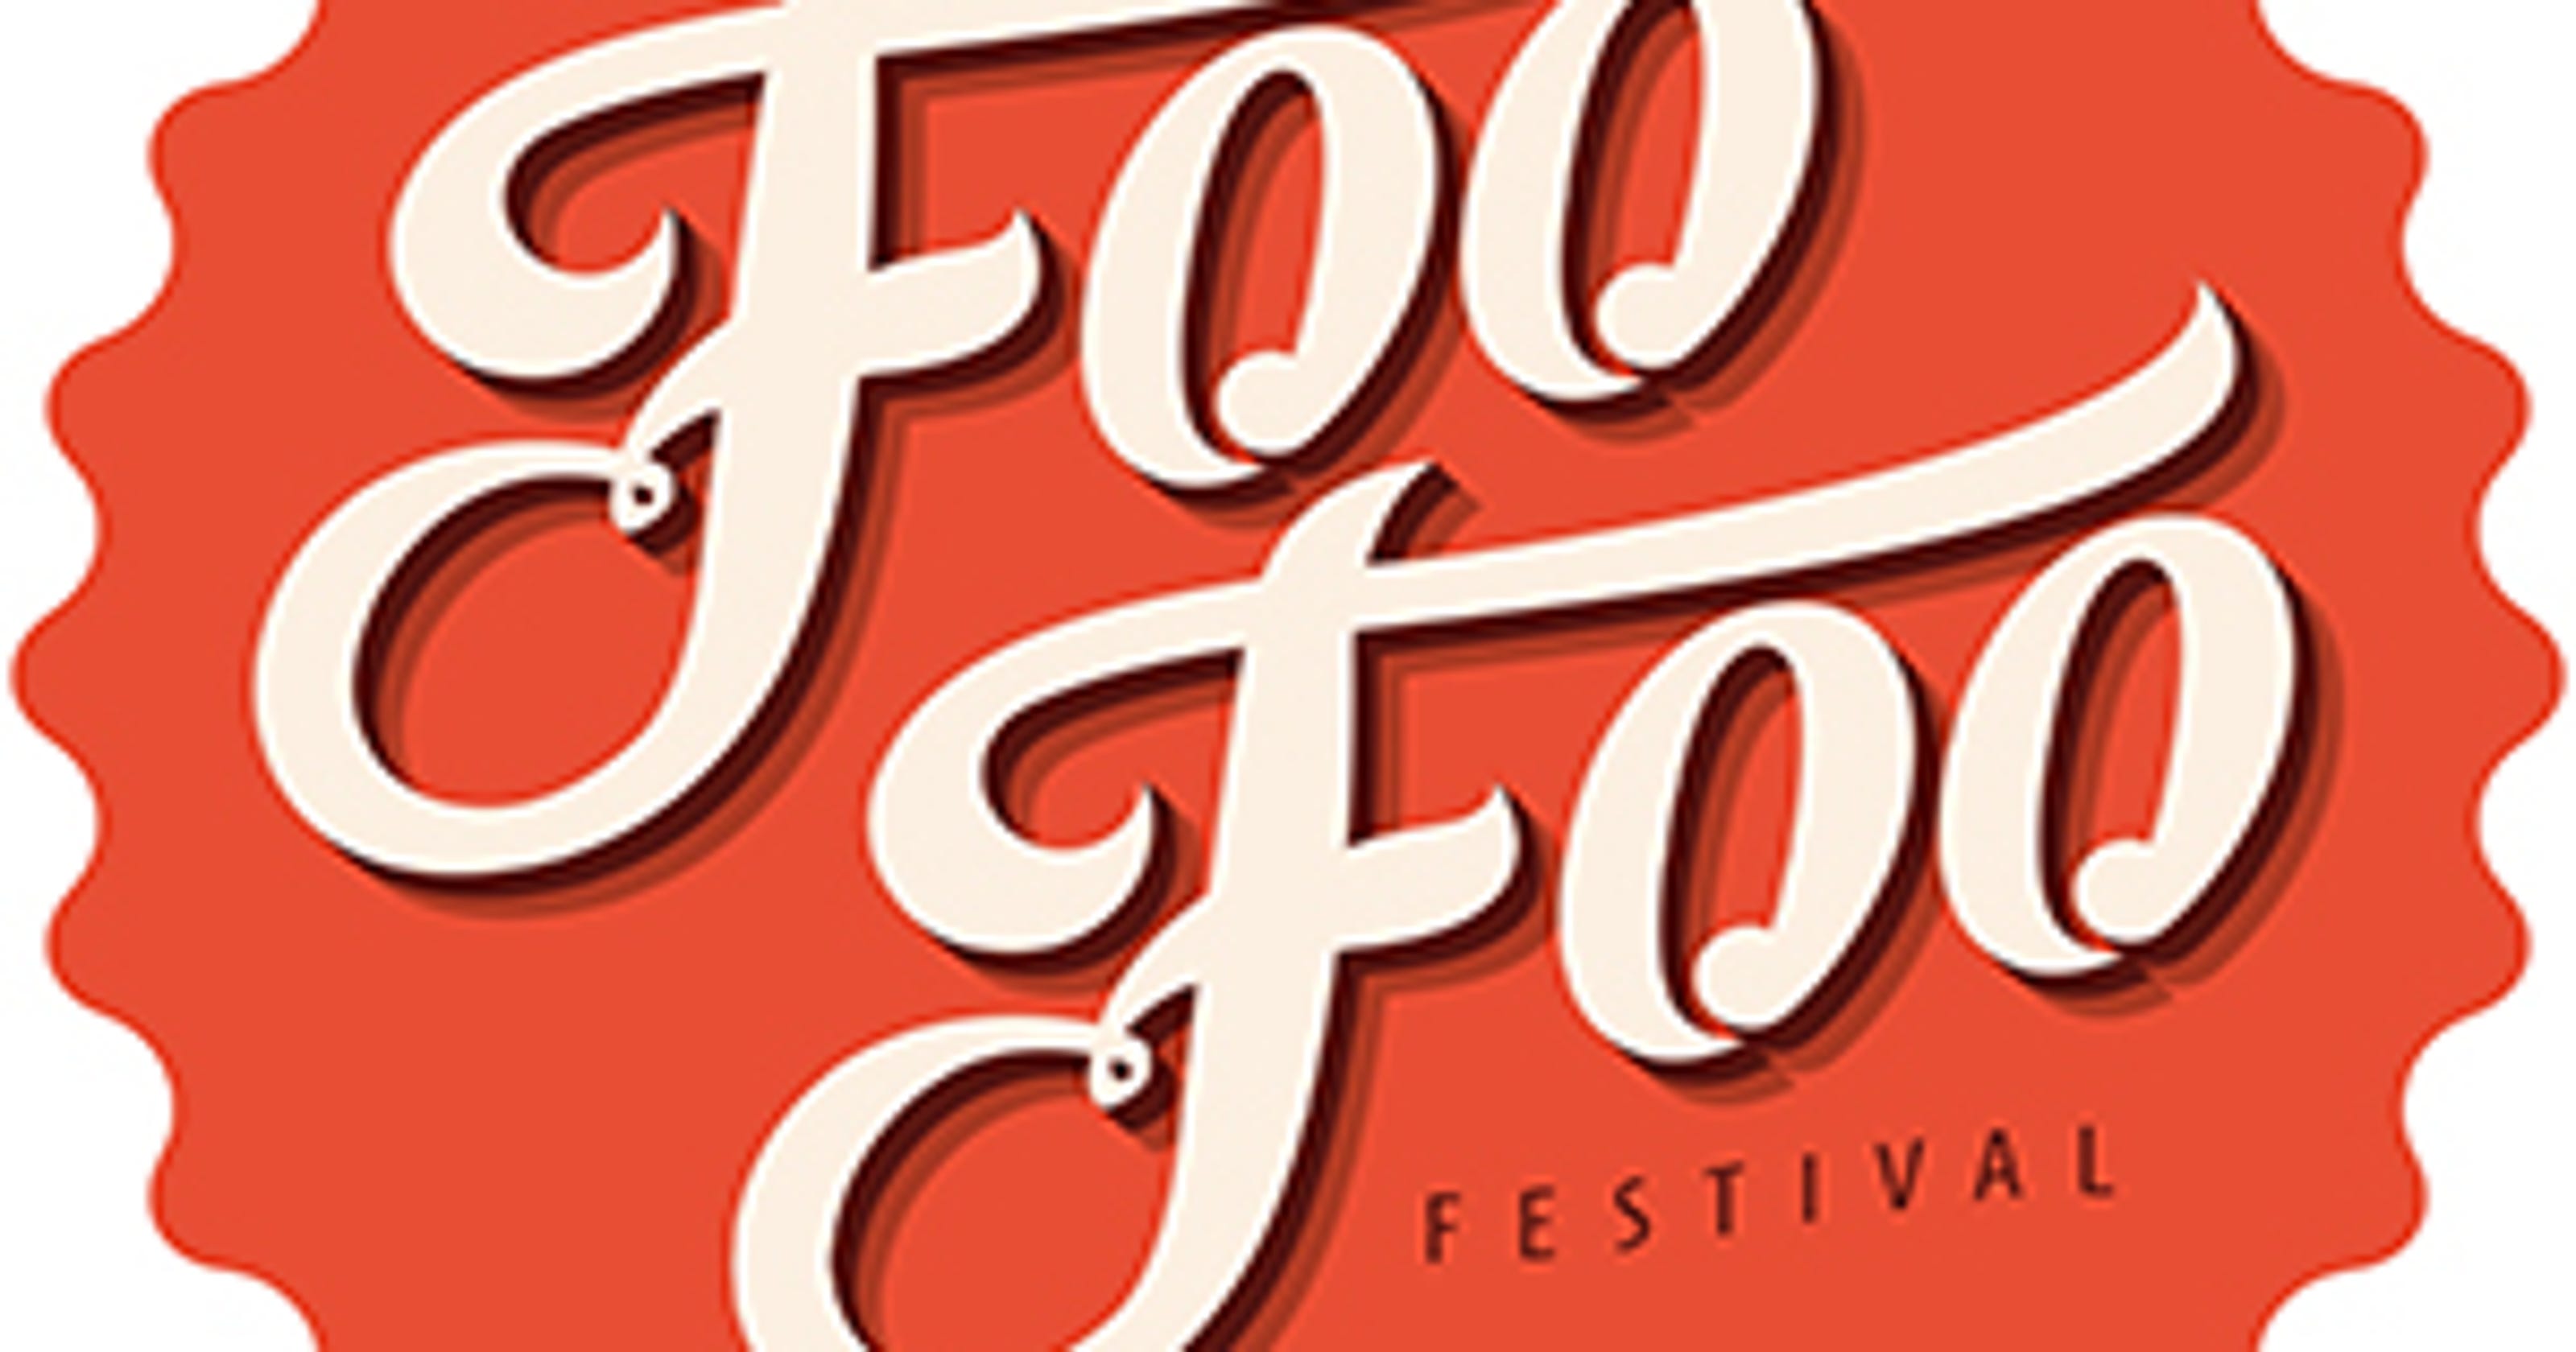 Foo Foo Fest fills November calendar — but what is it?